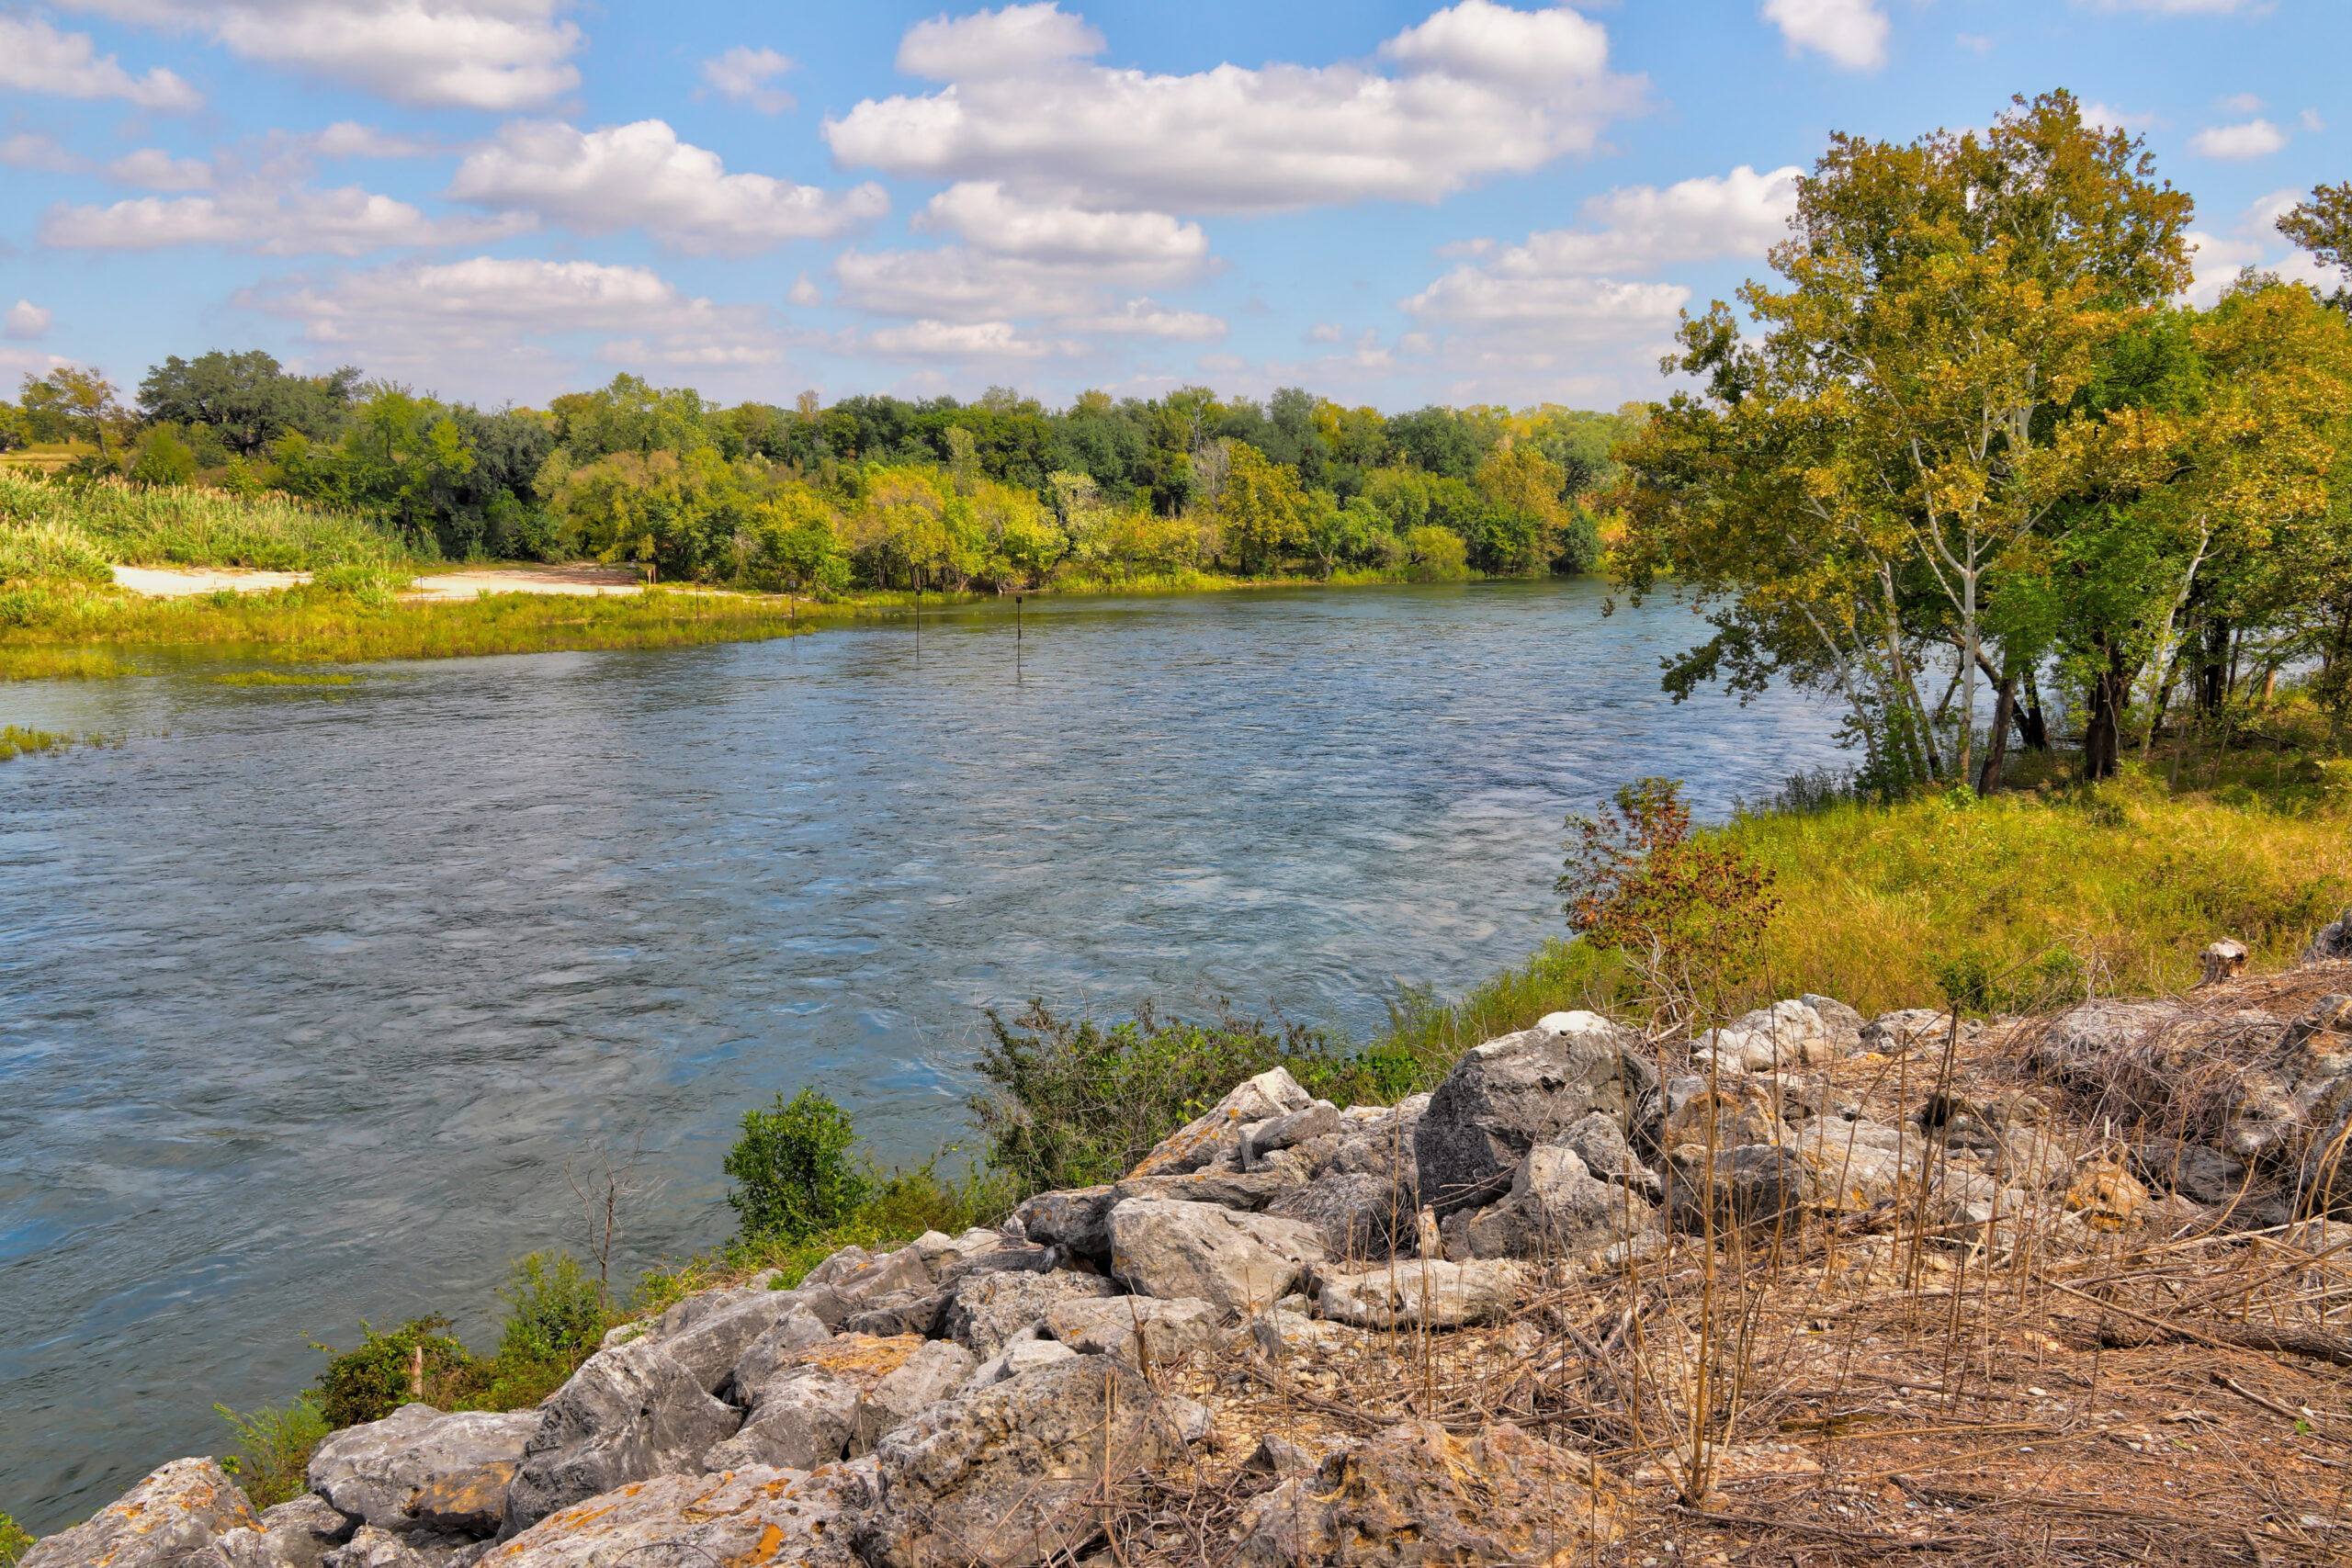 The Brazos river near Waco Texas